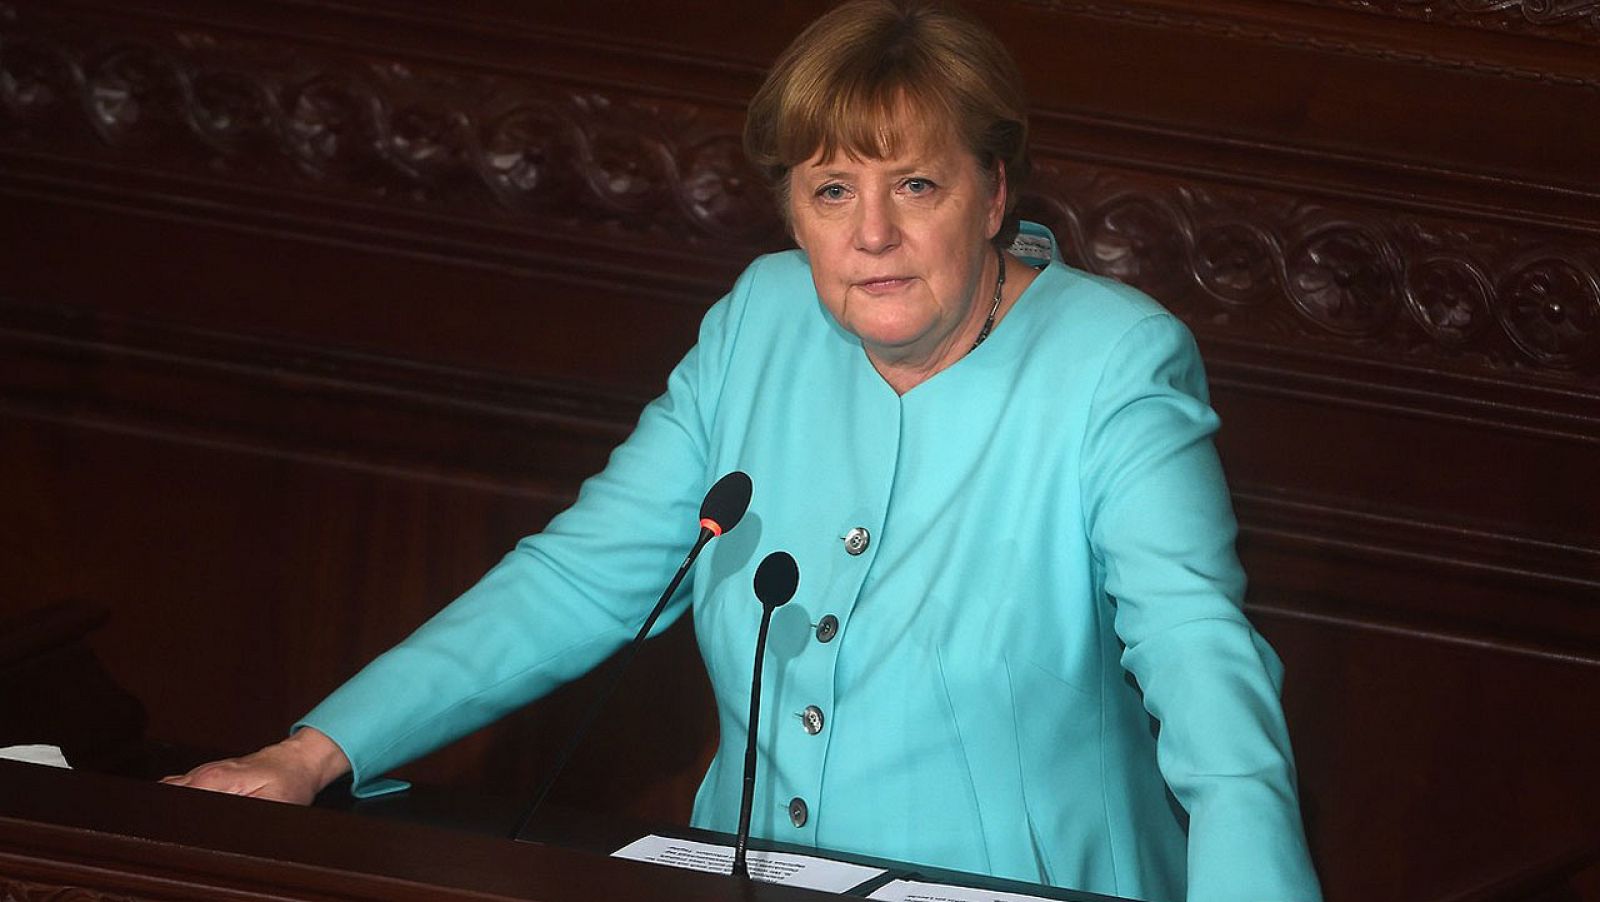 La canciller alemana Angela Merkel en una imagen en Túnez